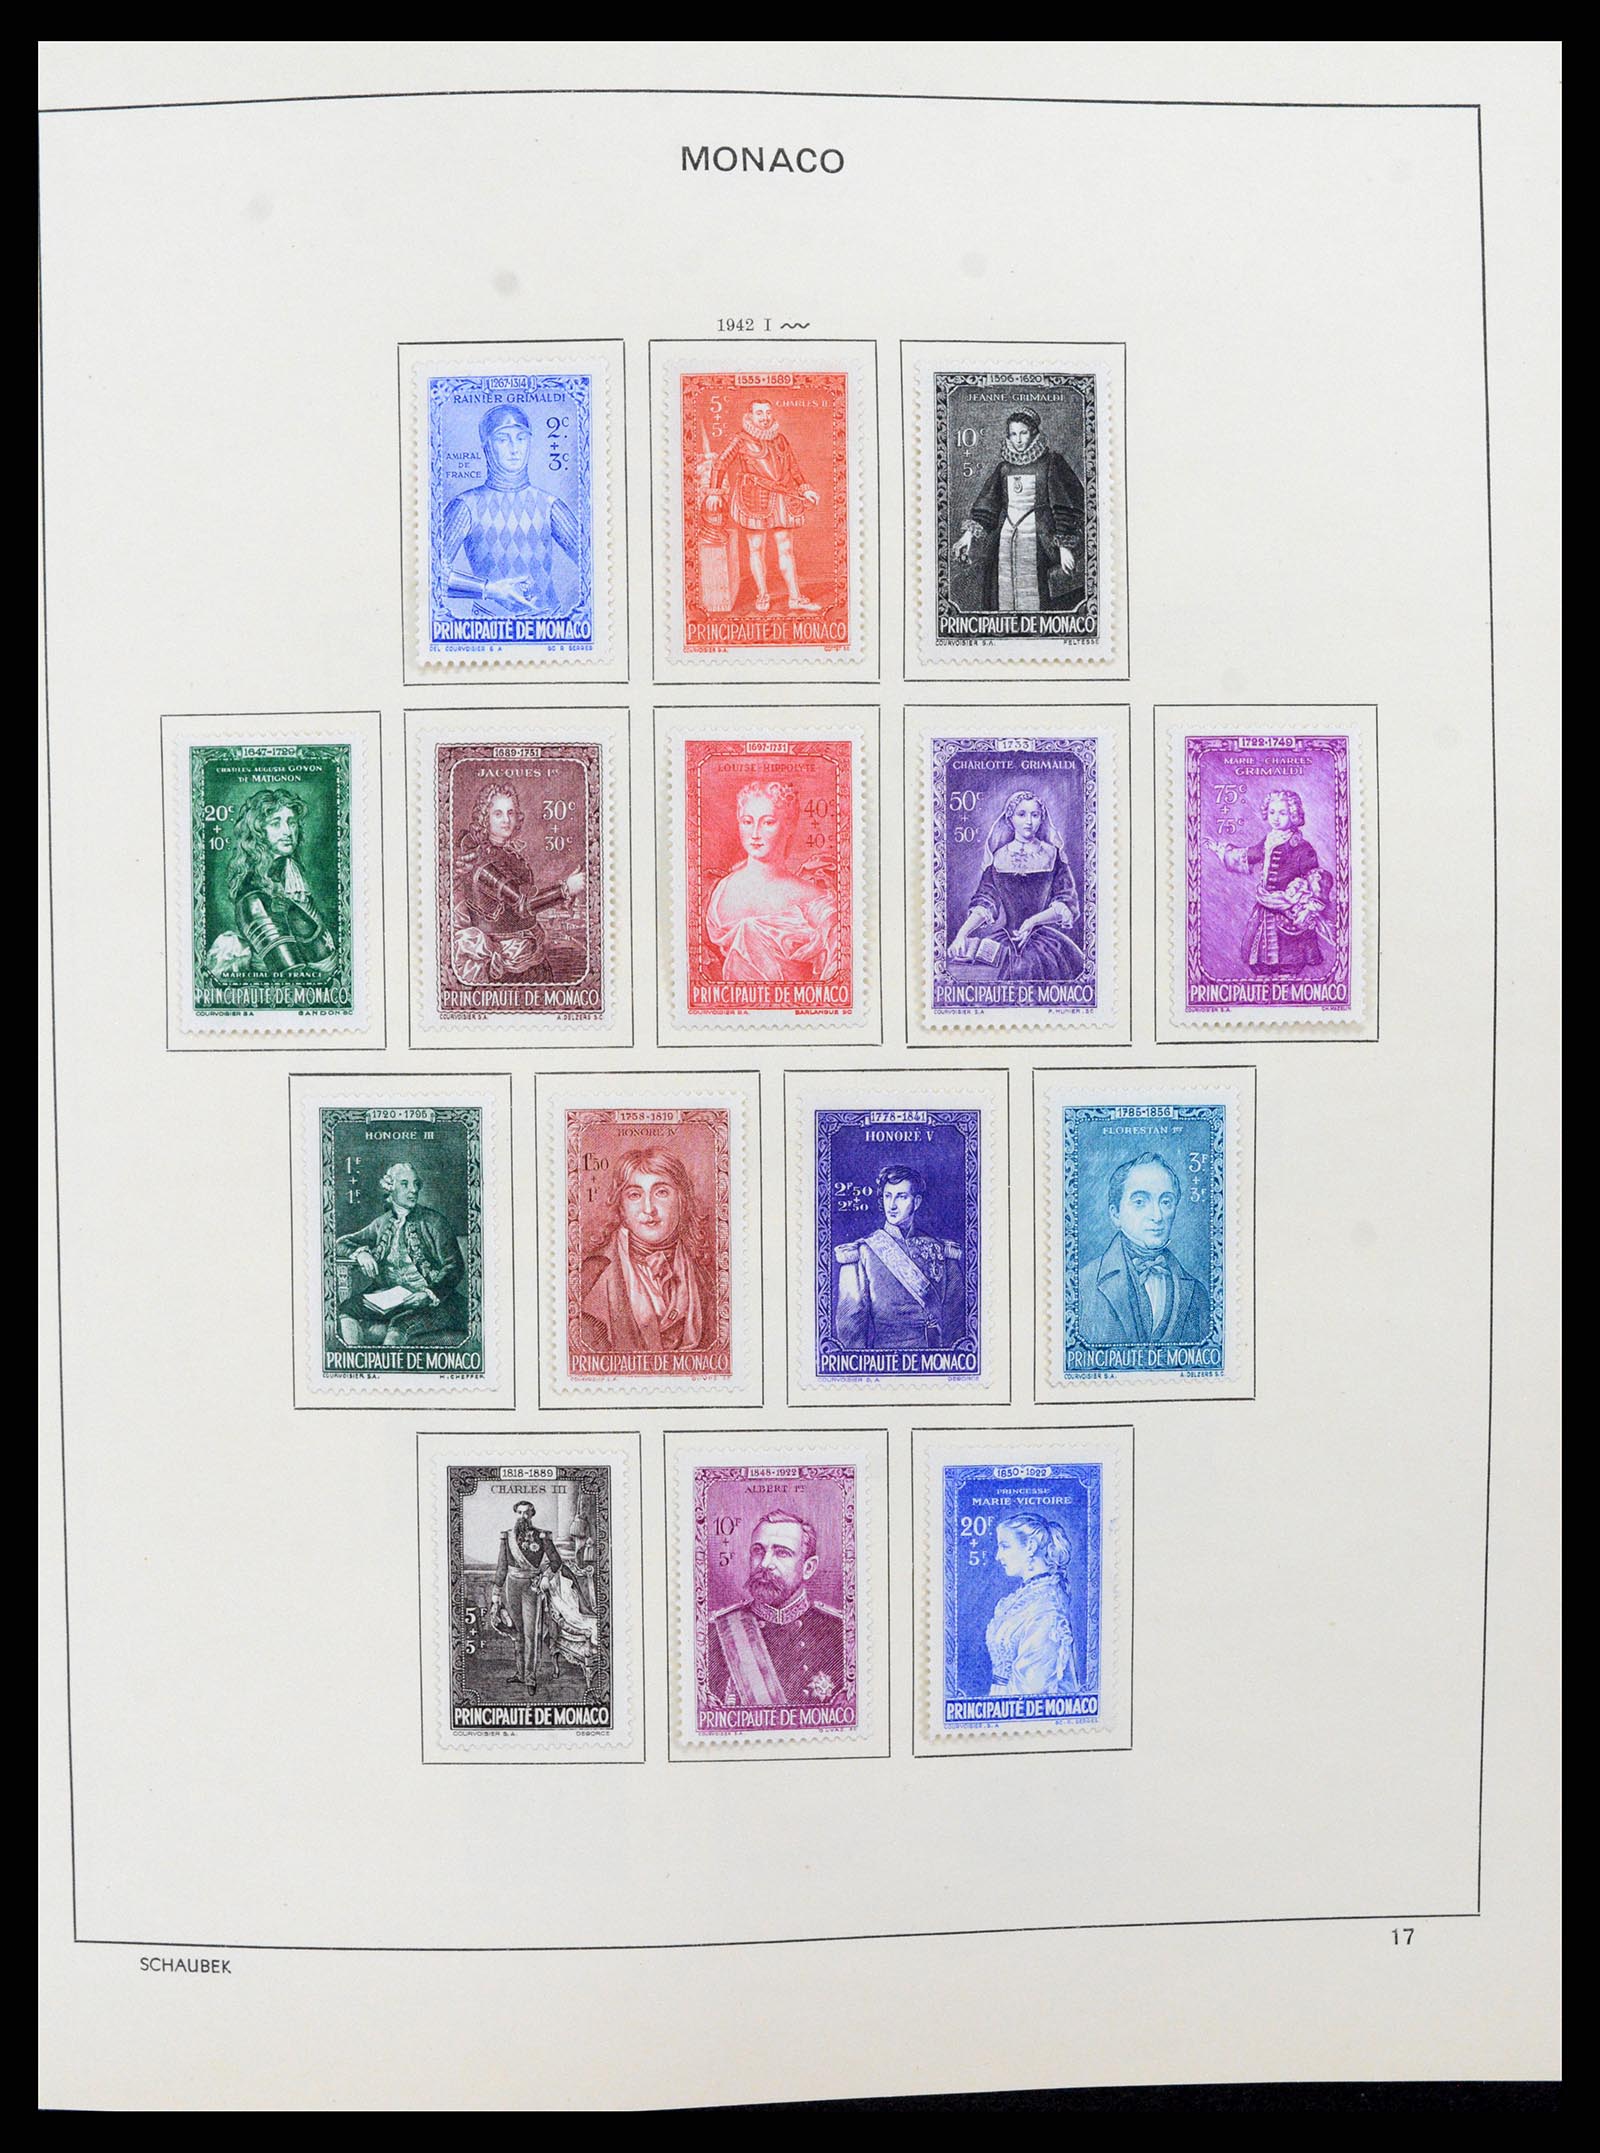 37570 017 - Stamp collection 37570 Monaco 1885-2013.